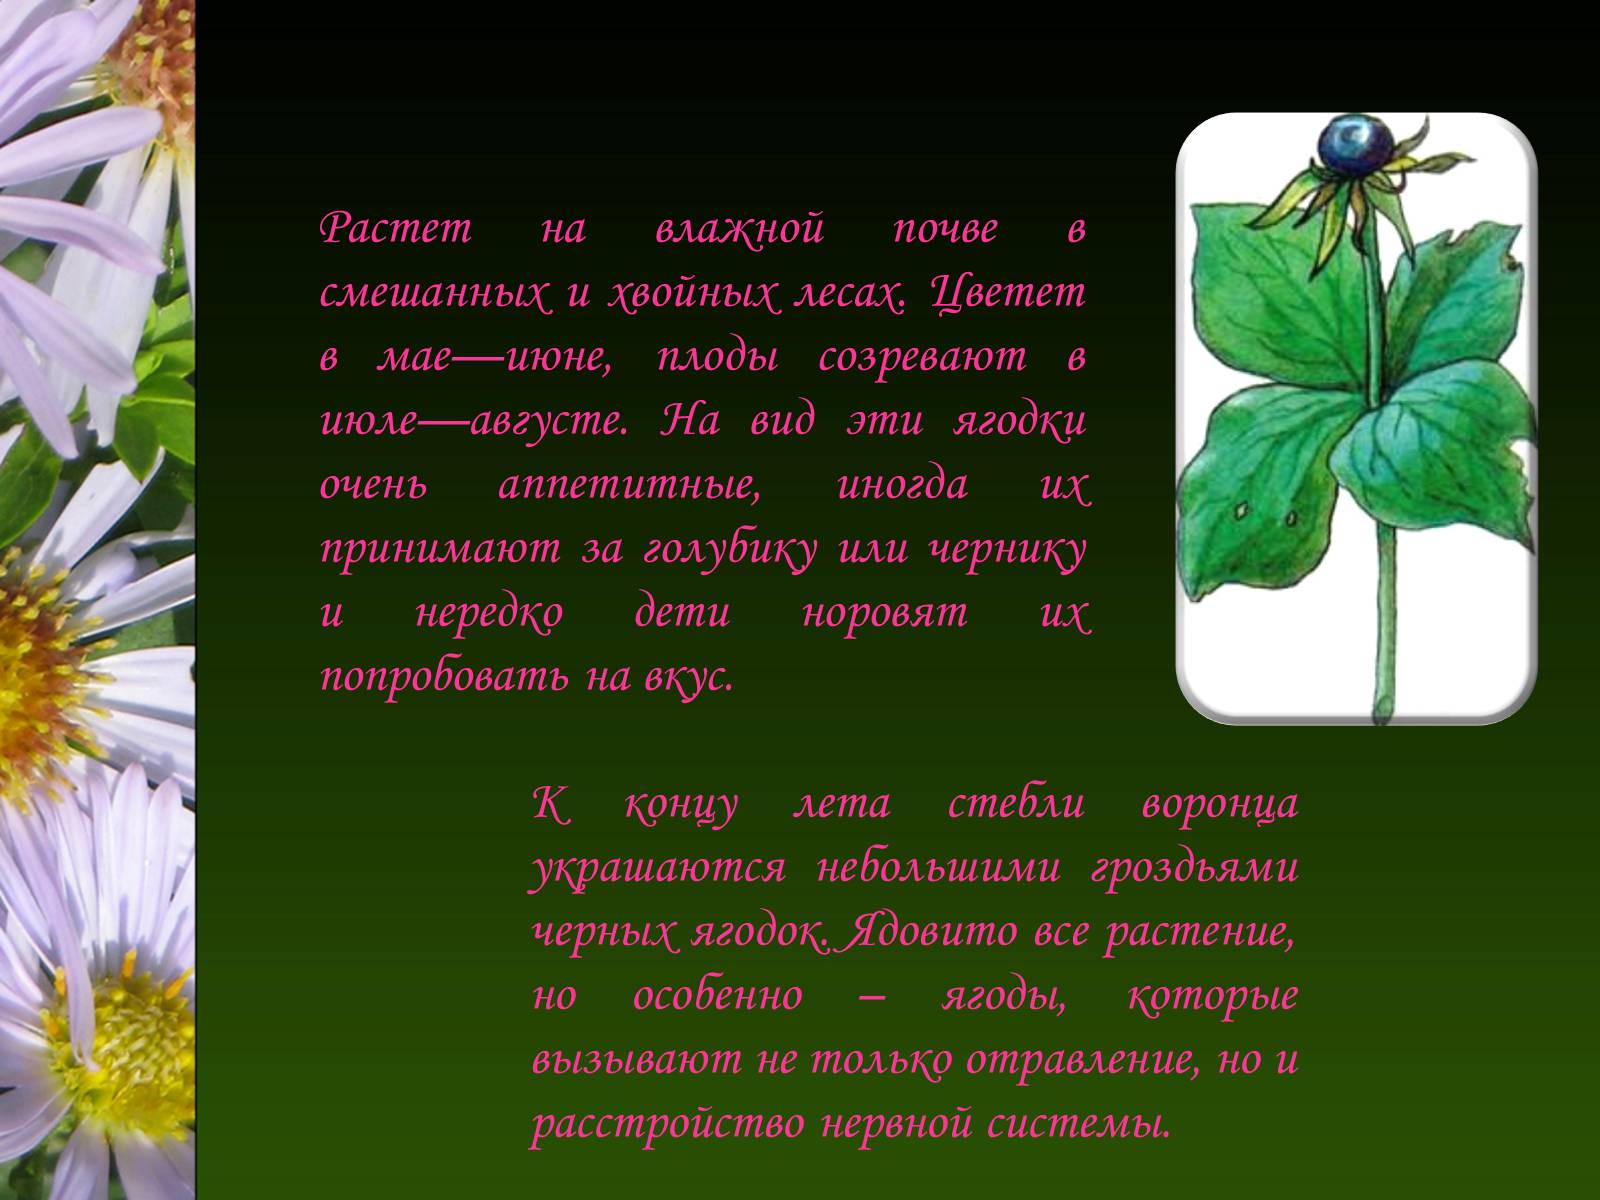 Презентація на тему «Ядовитые растения Украины» - Слайд #20